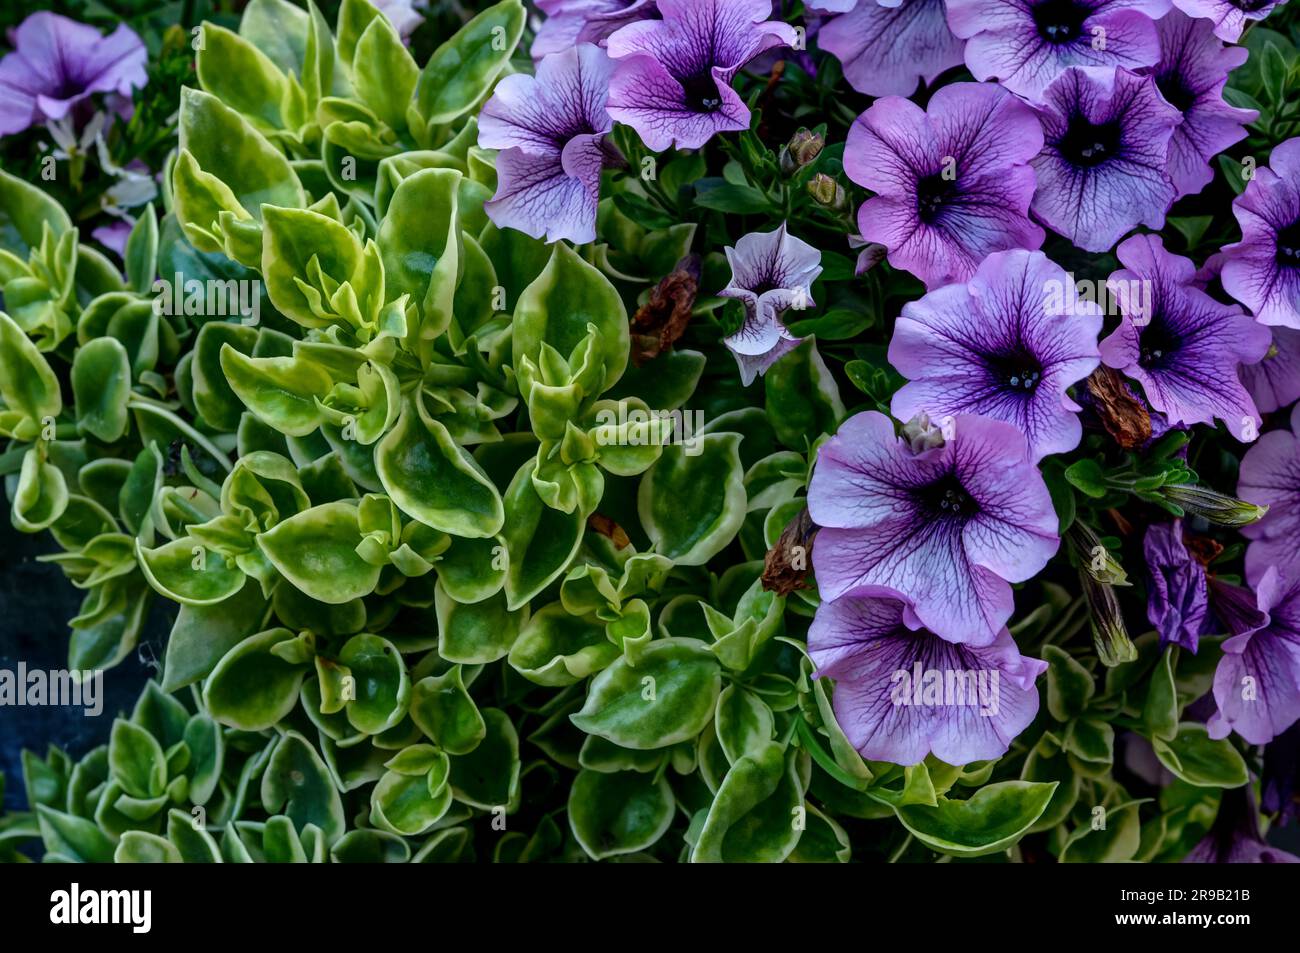 Petunia ornamental flowers in natural habitat in full bloom from close range, elegant colorful plants Stock Photo